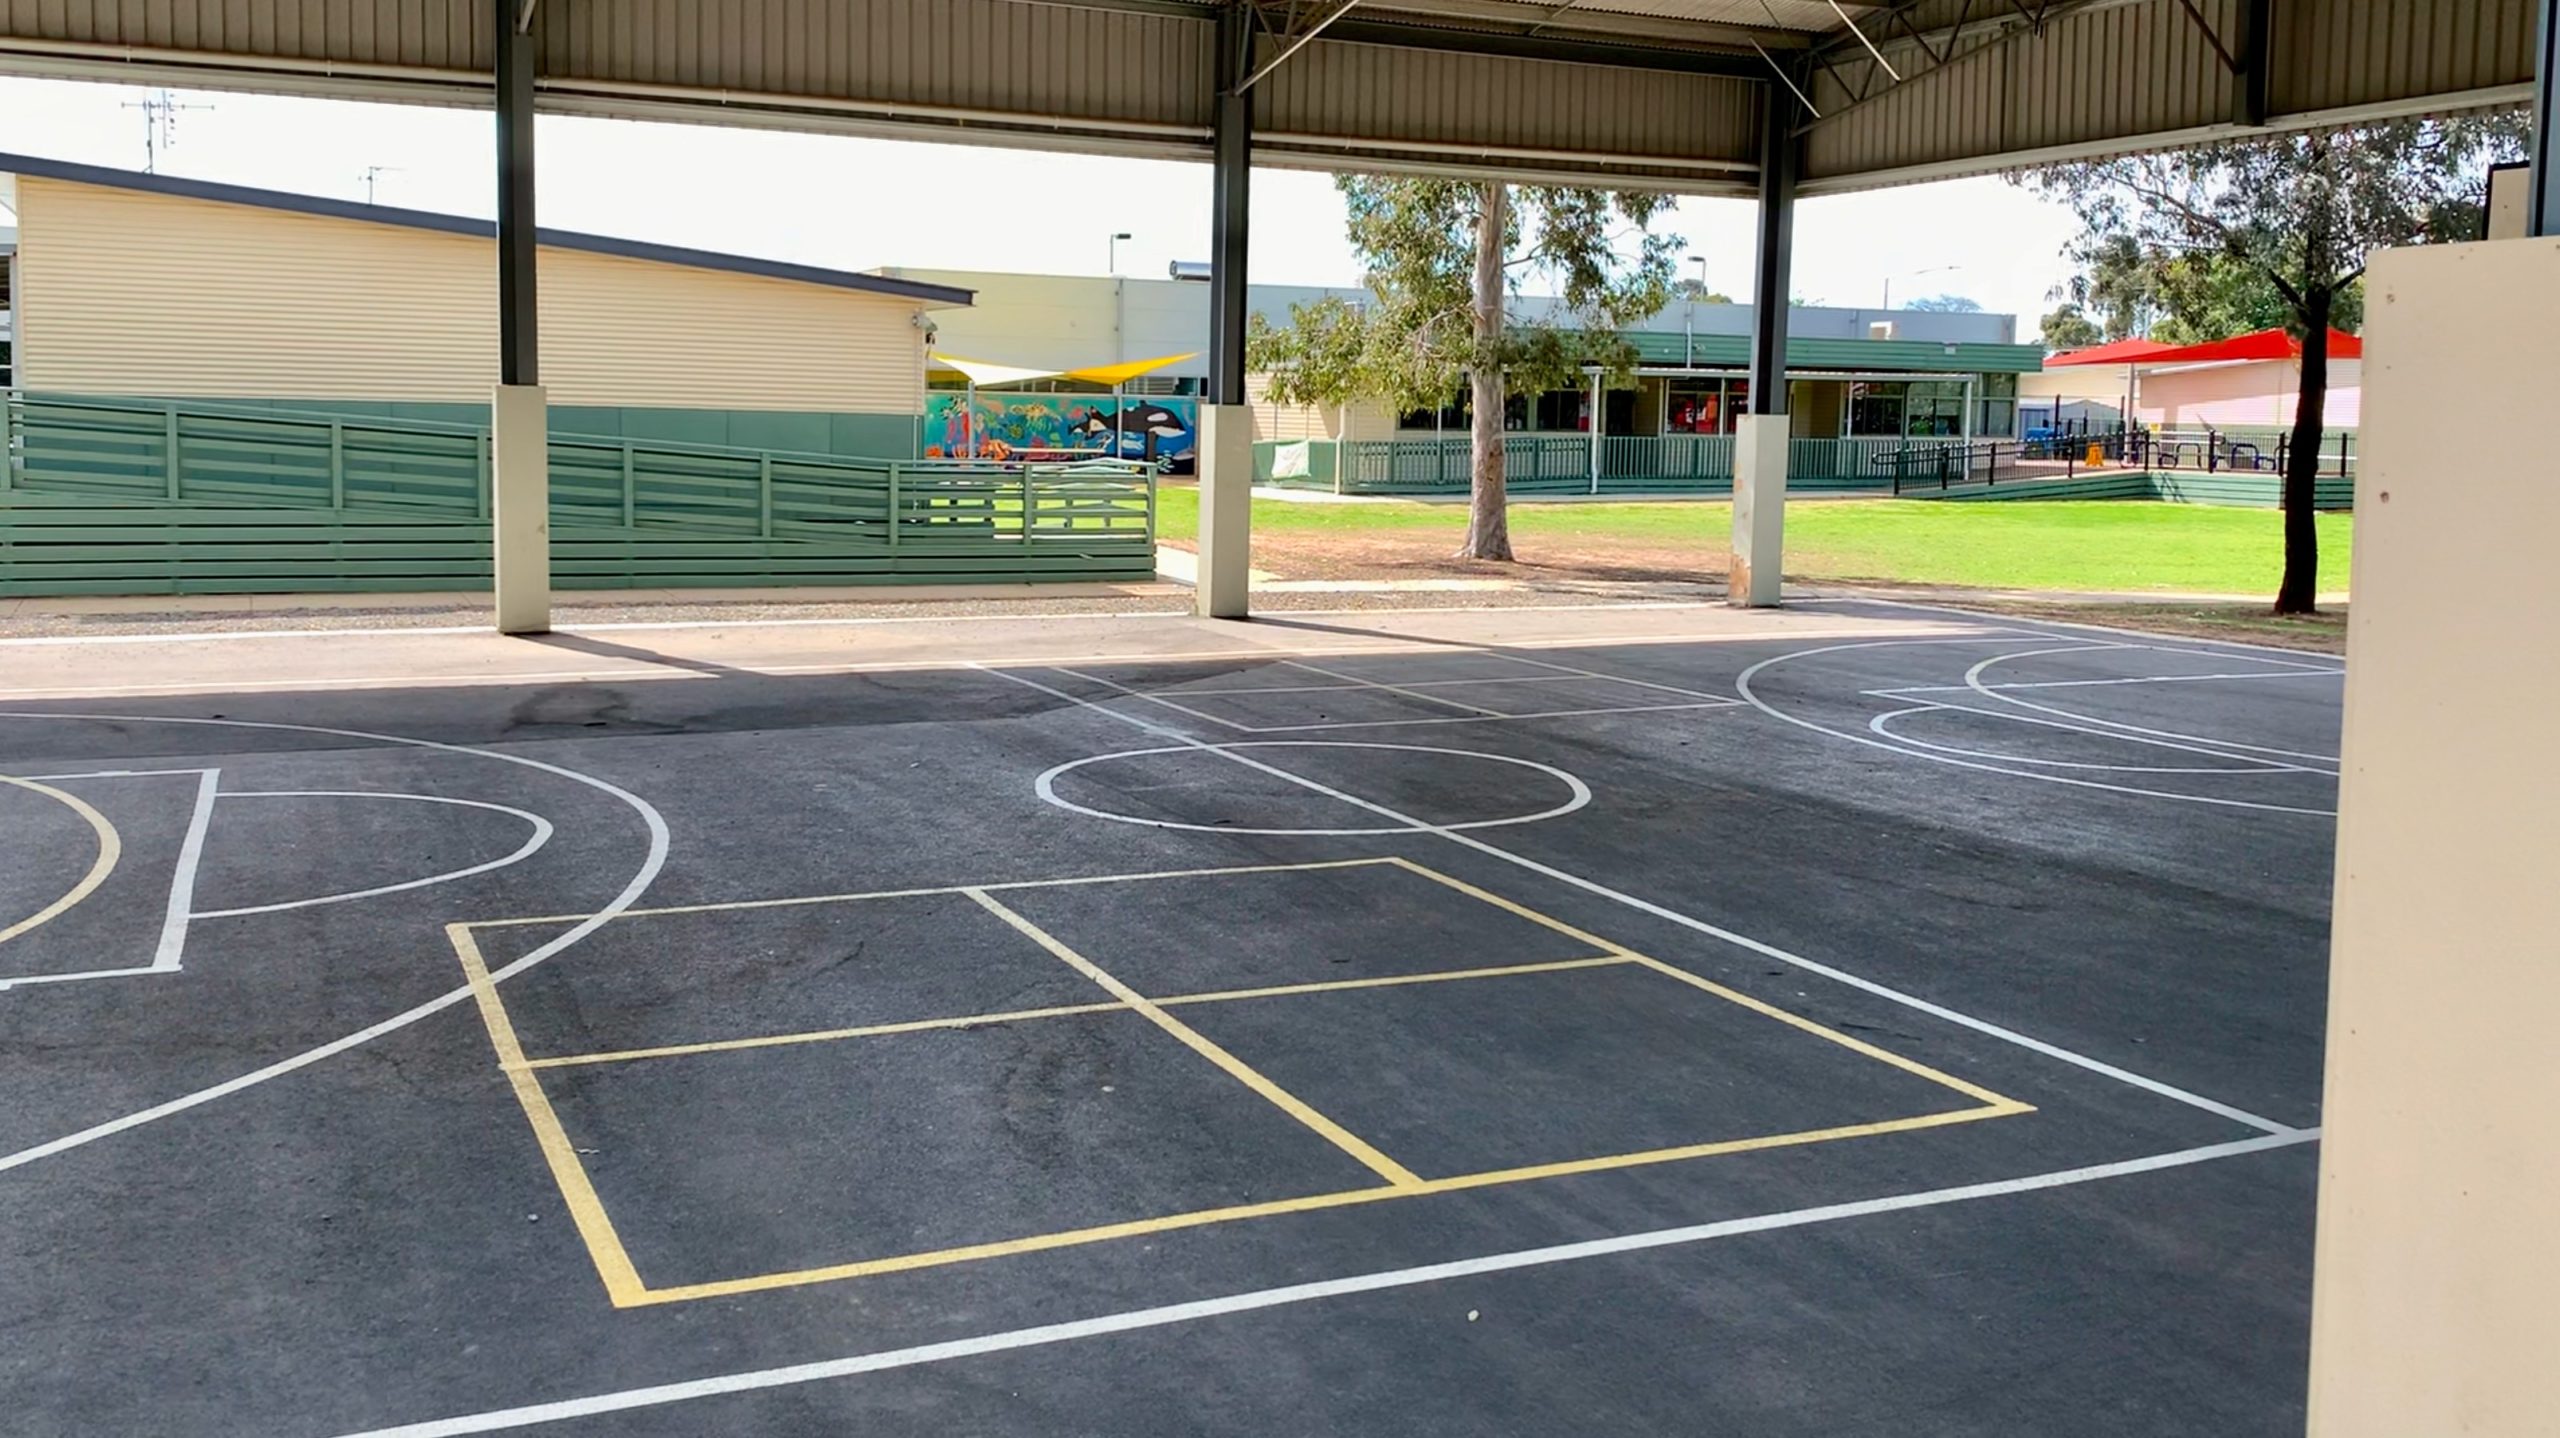 Verney Road School Basketball Court